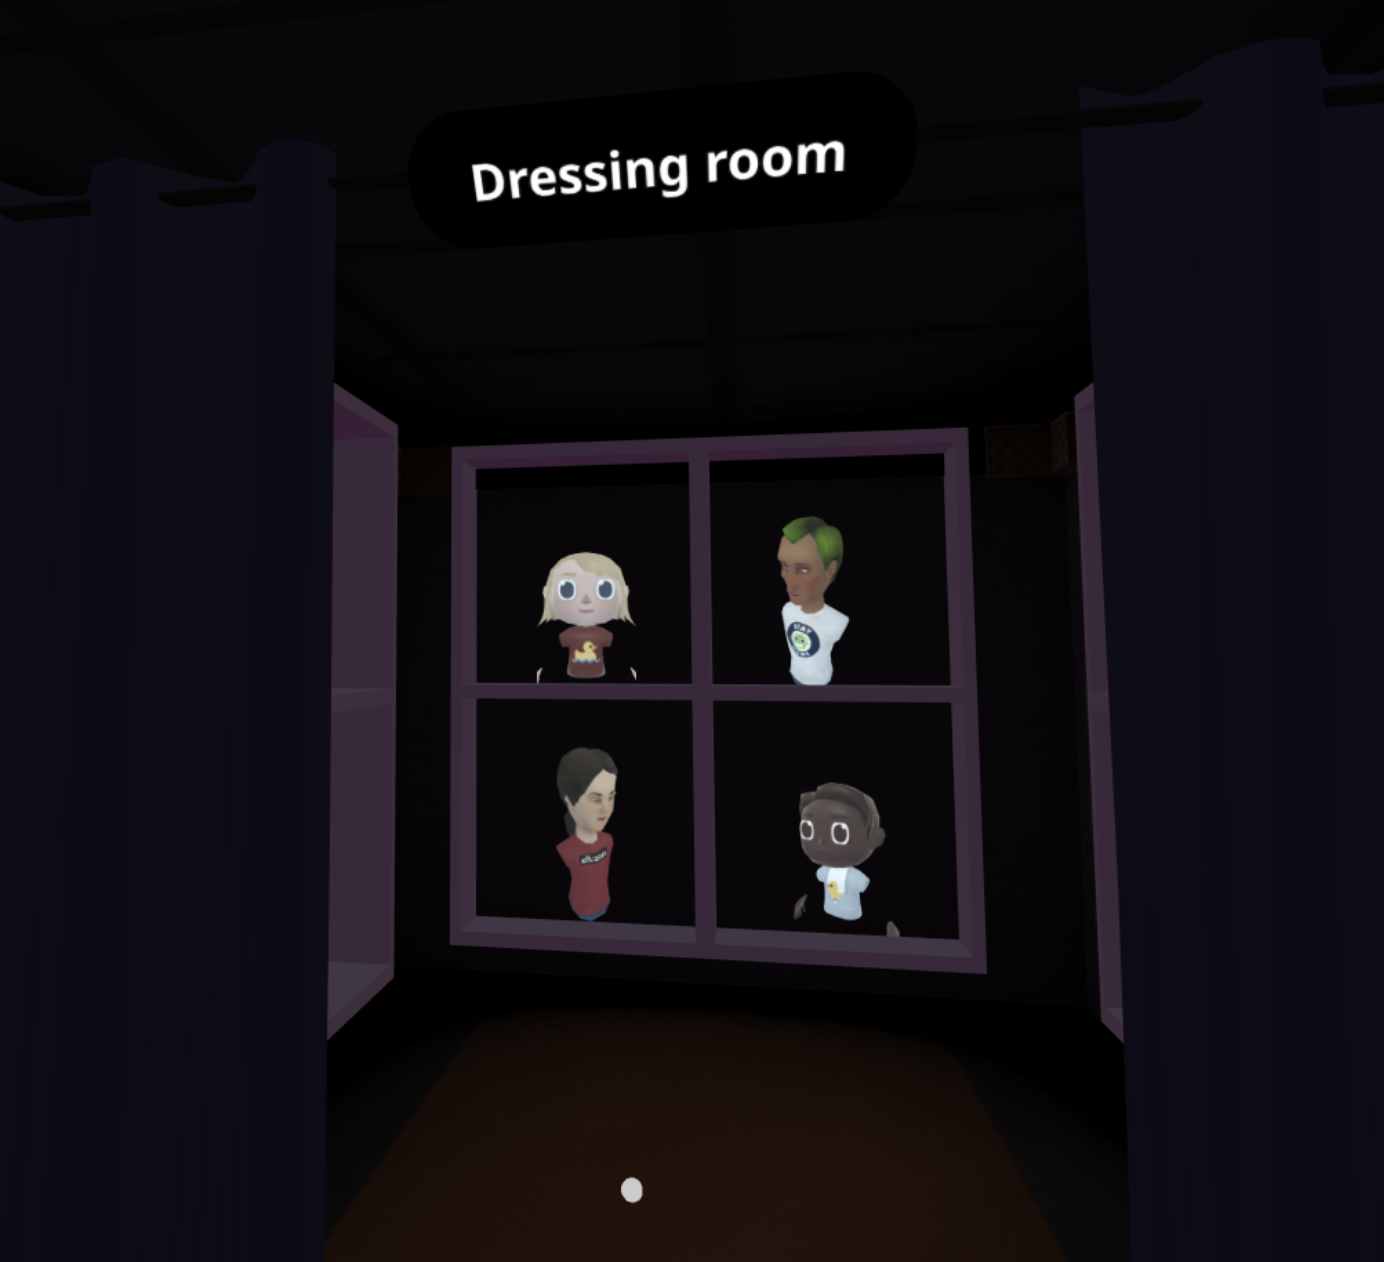 Example dressing room with custom avatars